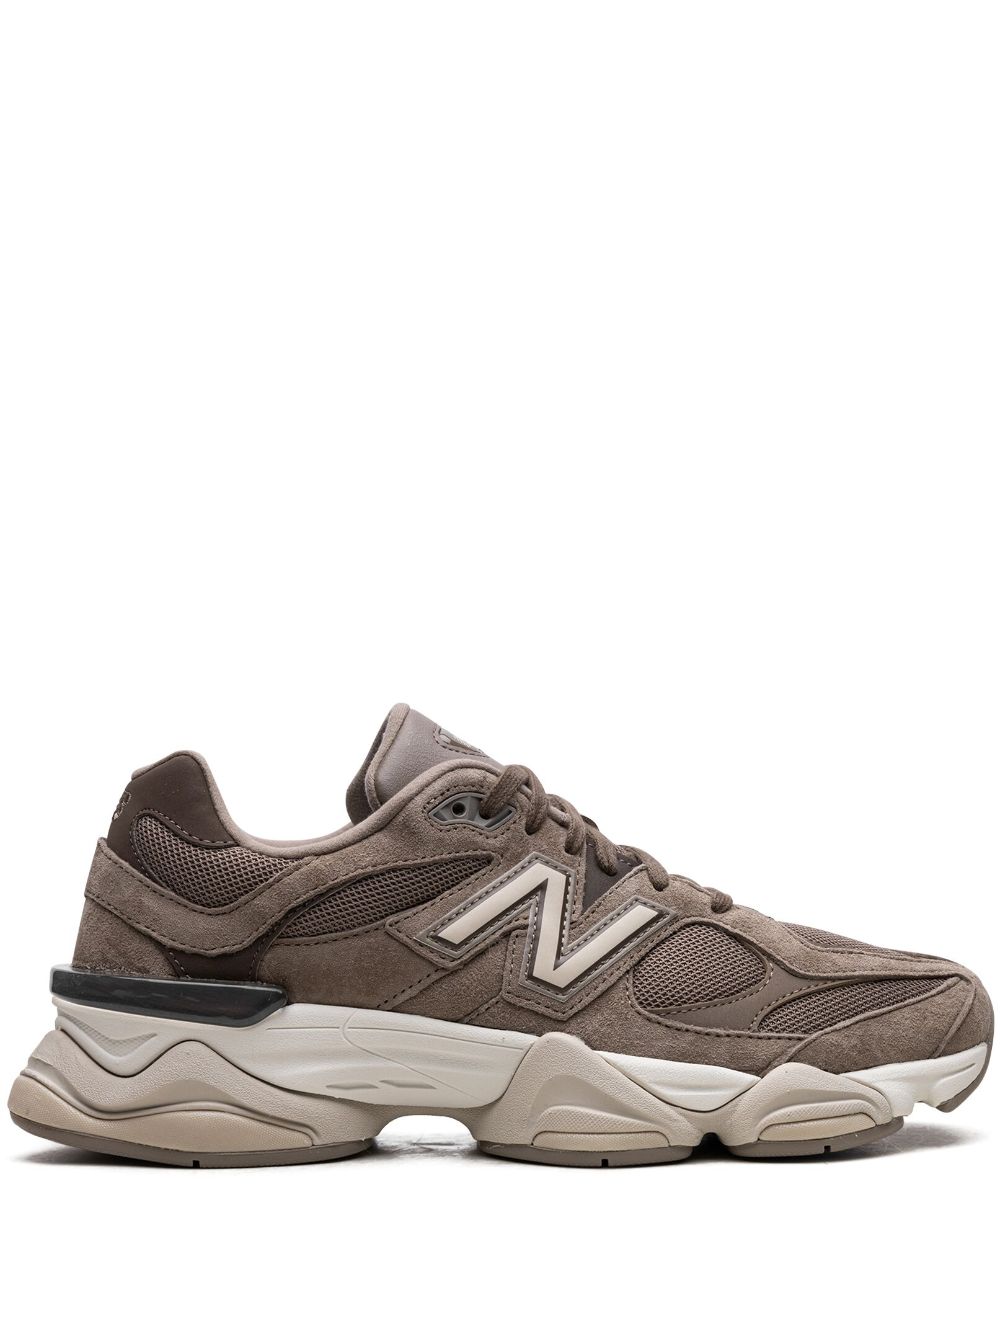 New Balance 9060 "Mushroom/Brown" sneakers von New Balance